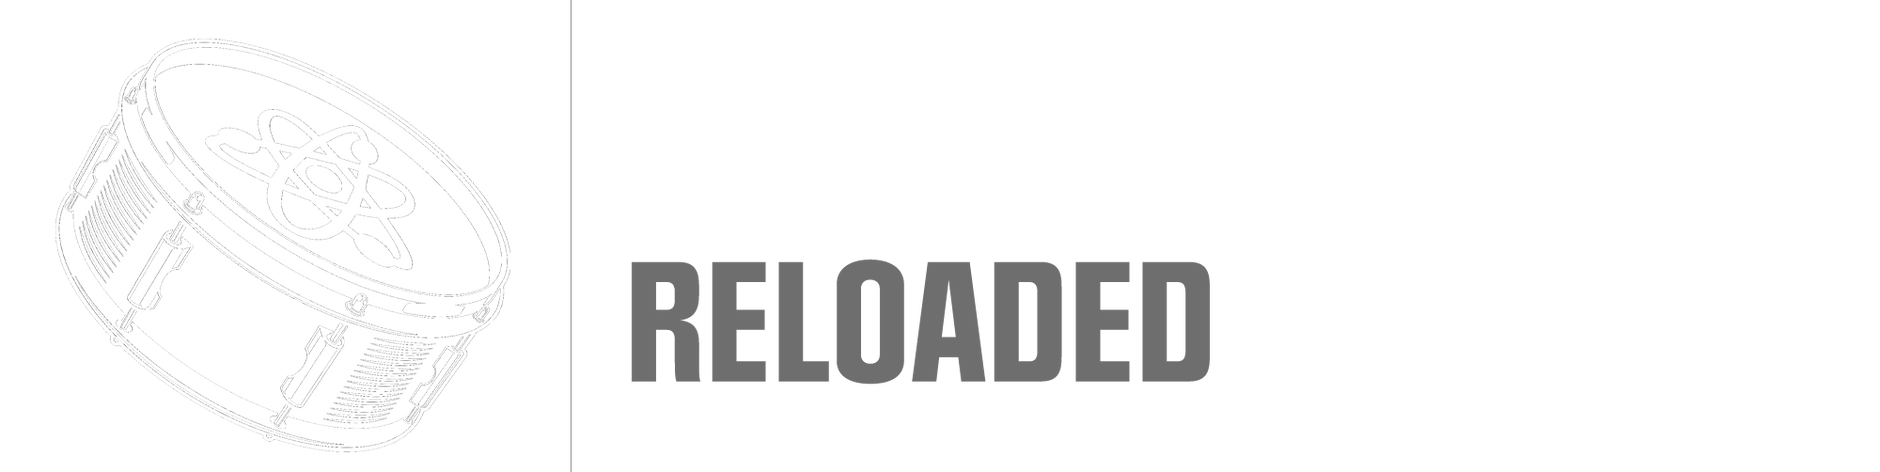 Boom Bap Labs